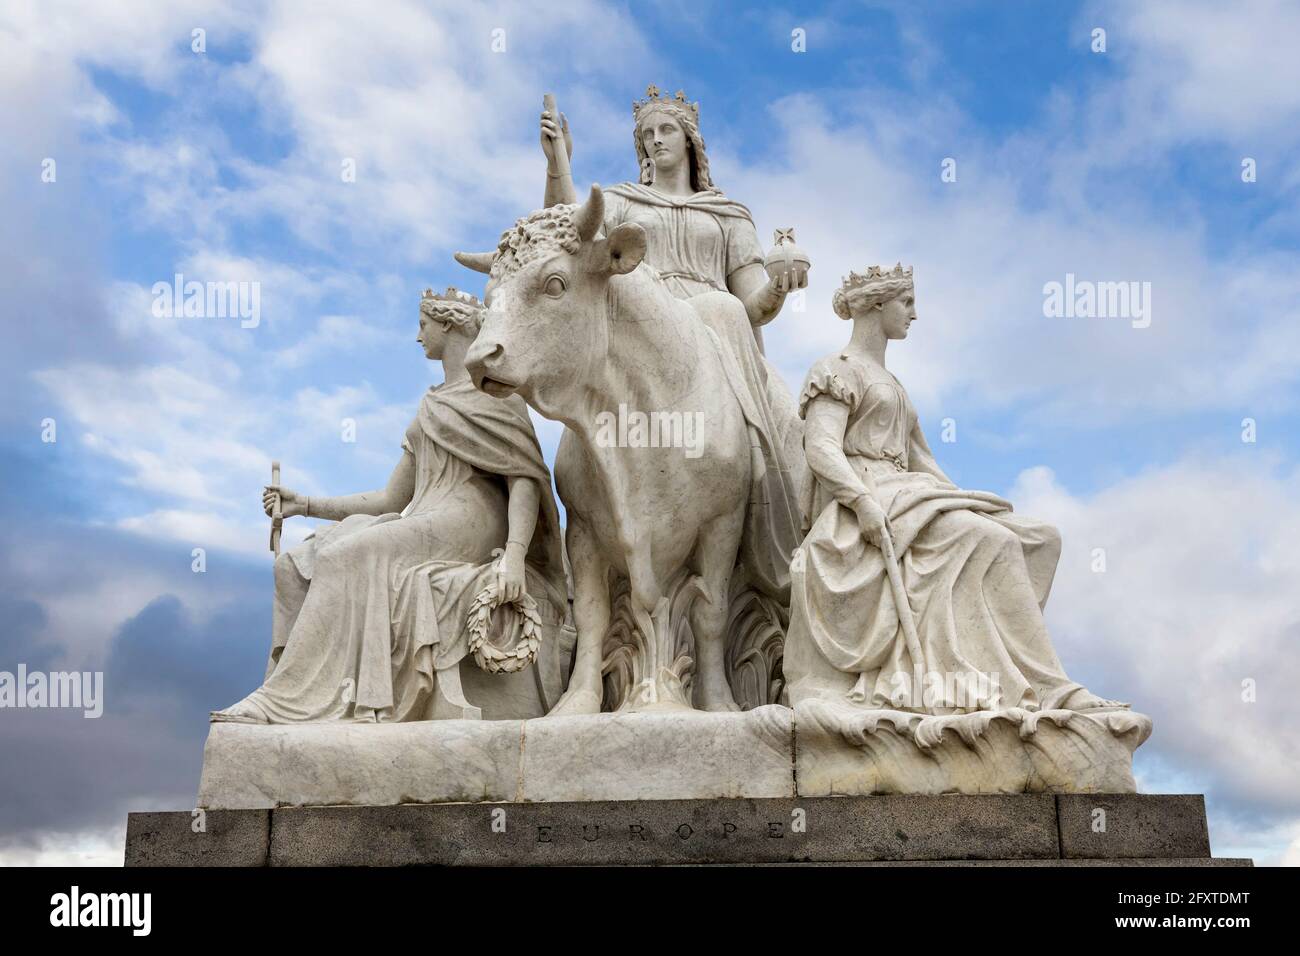 Europa-Gruppenstatue von Patrick MacDowell Teil des Albert Memorial, Kensington Gardens, London, England, Großbritannien Stockfoto